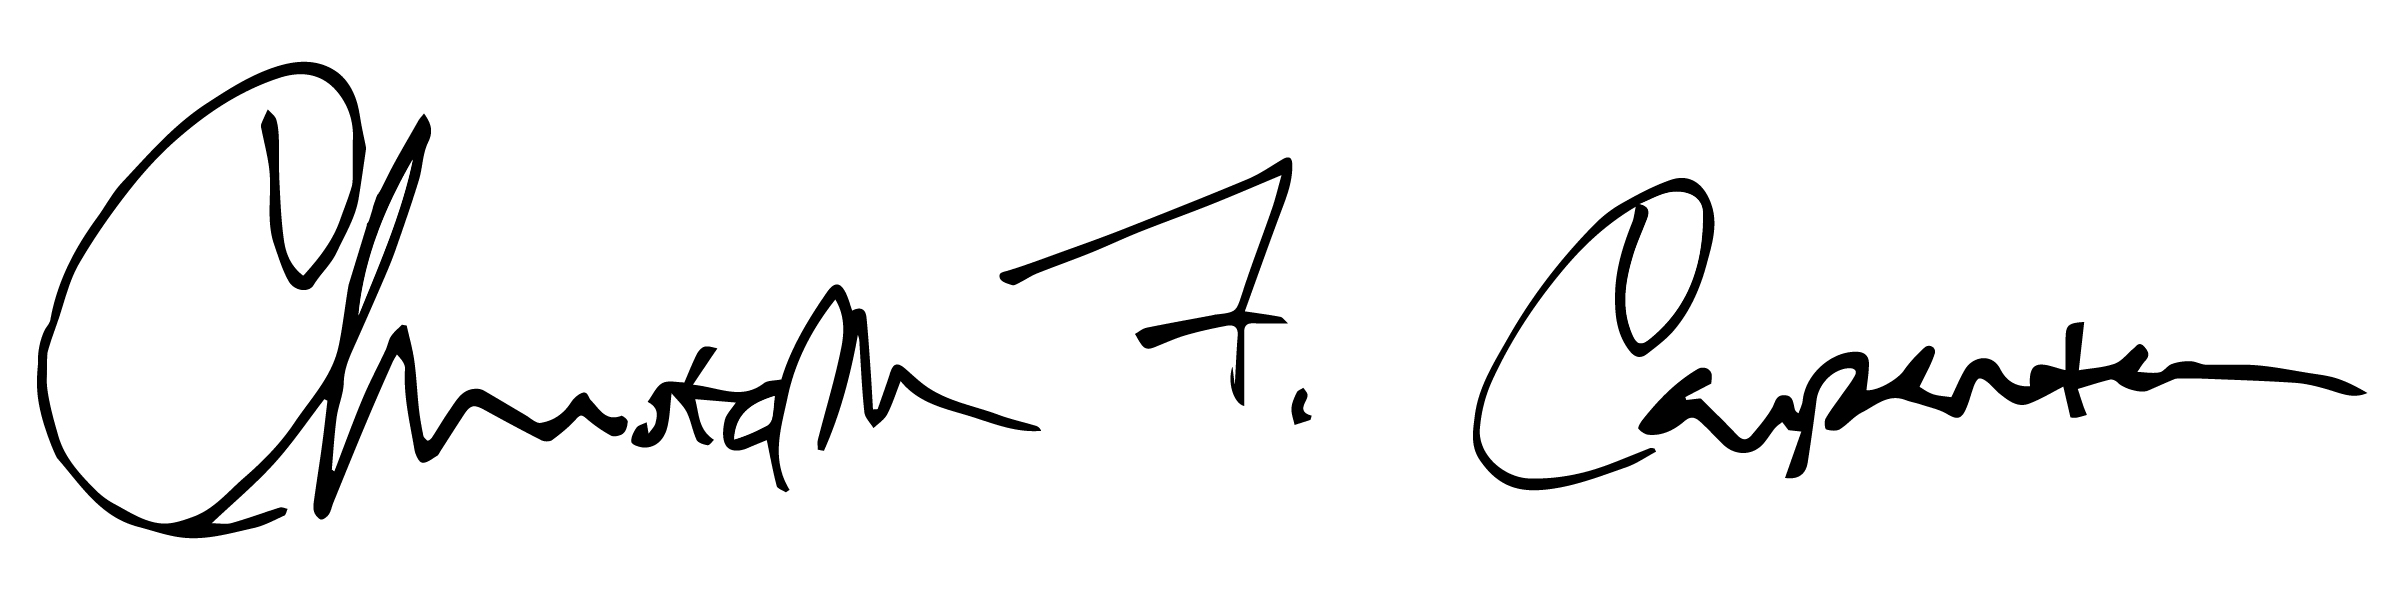 An image of Chris Carpenter's signature